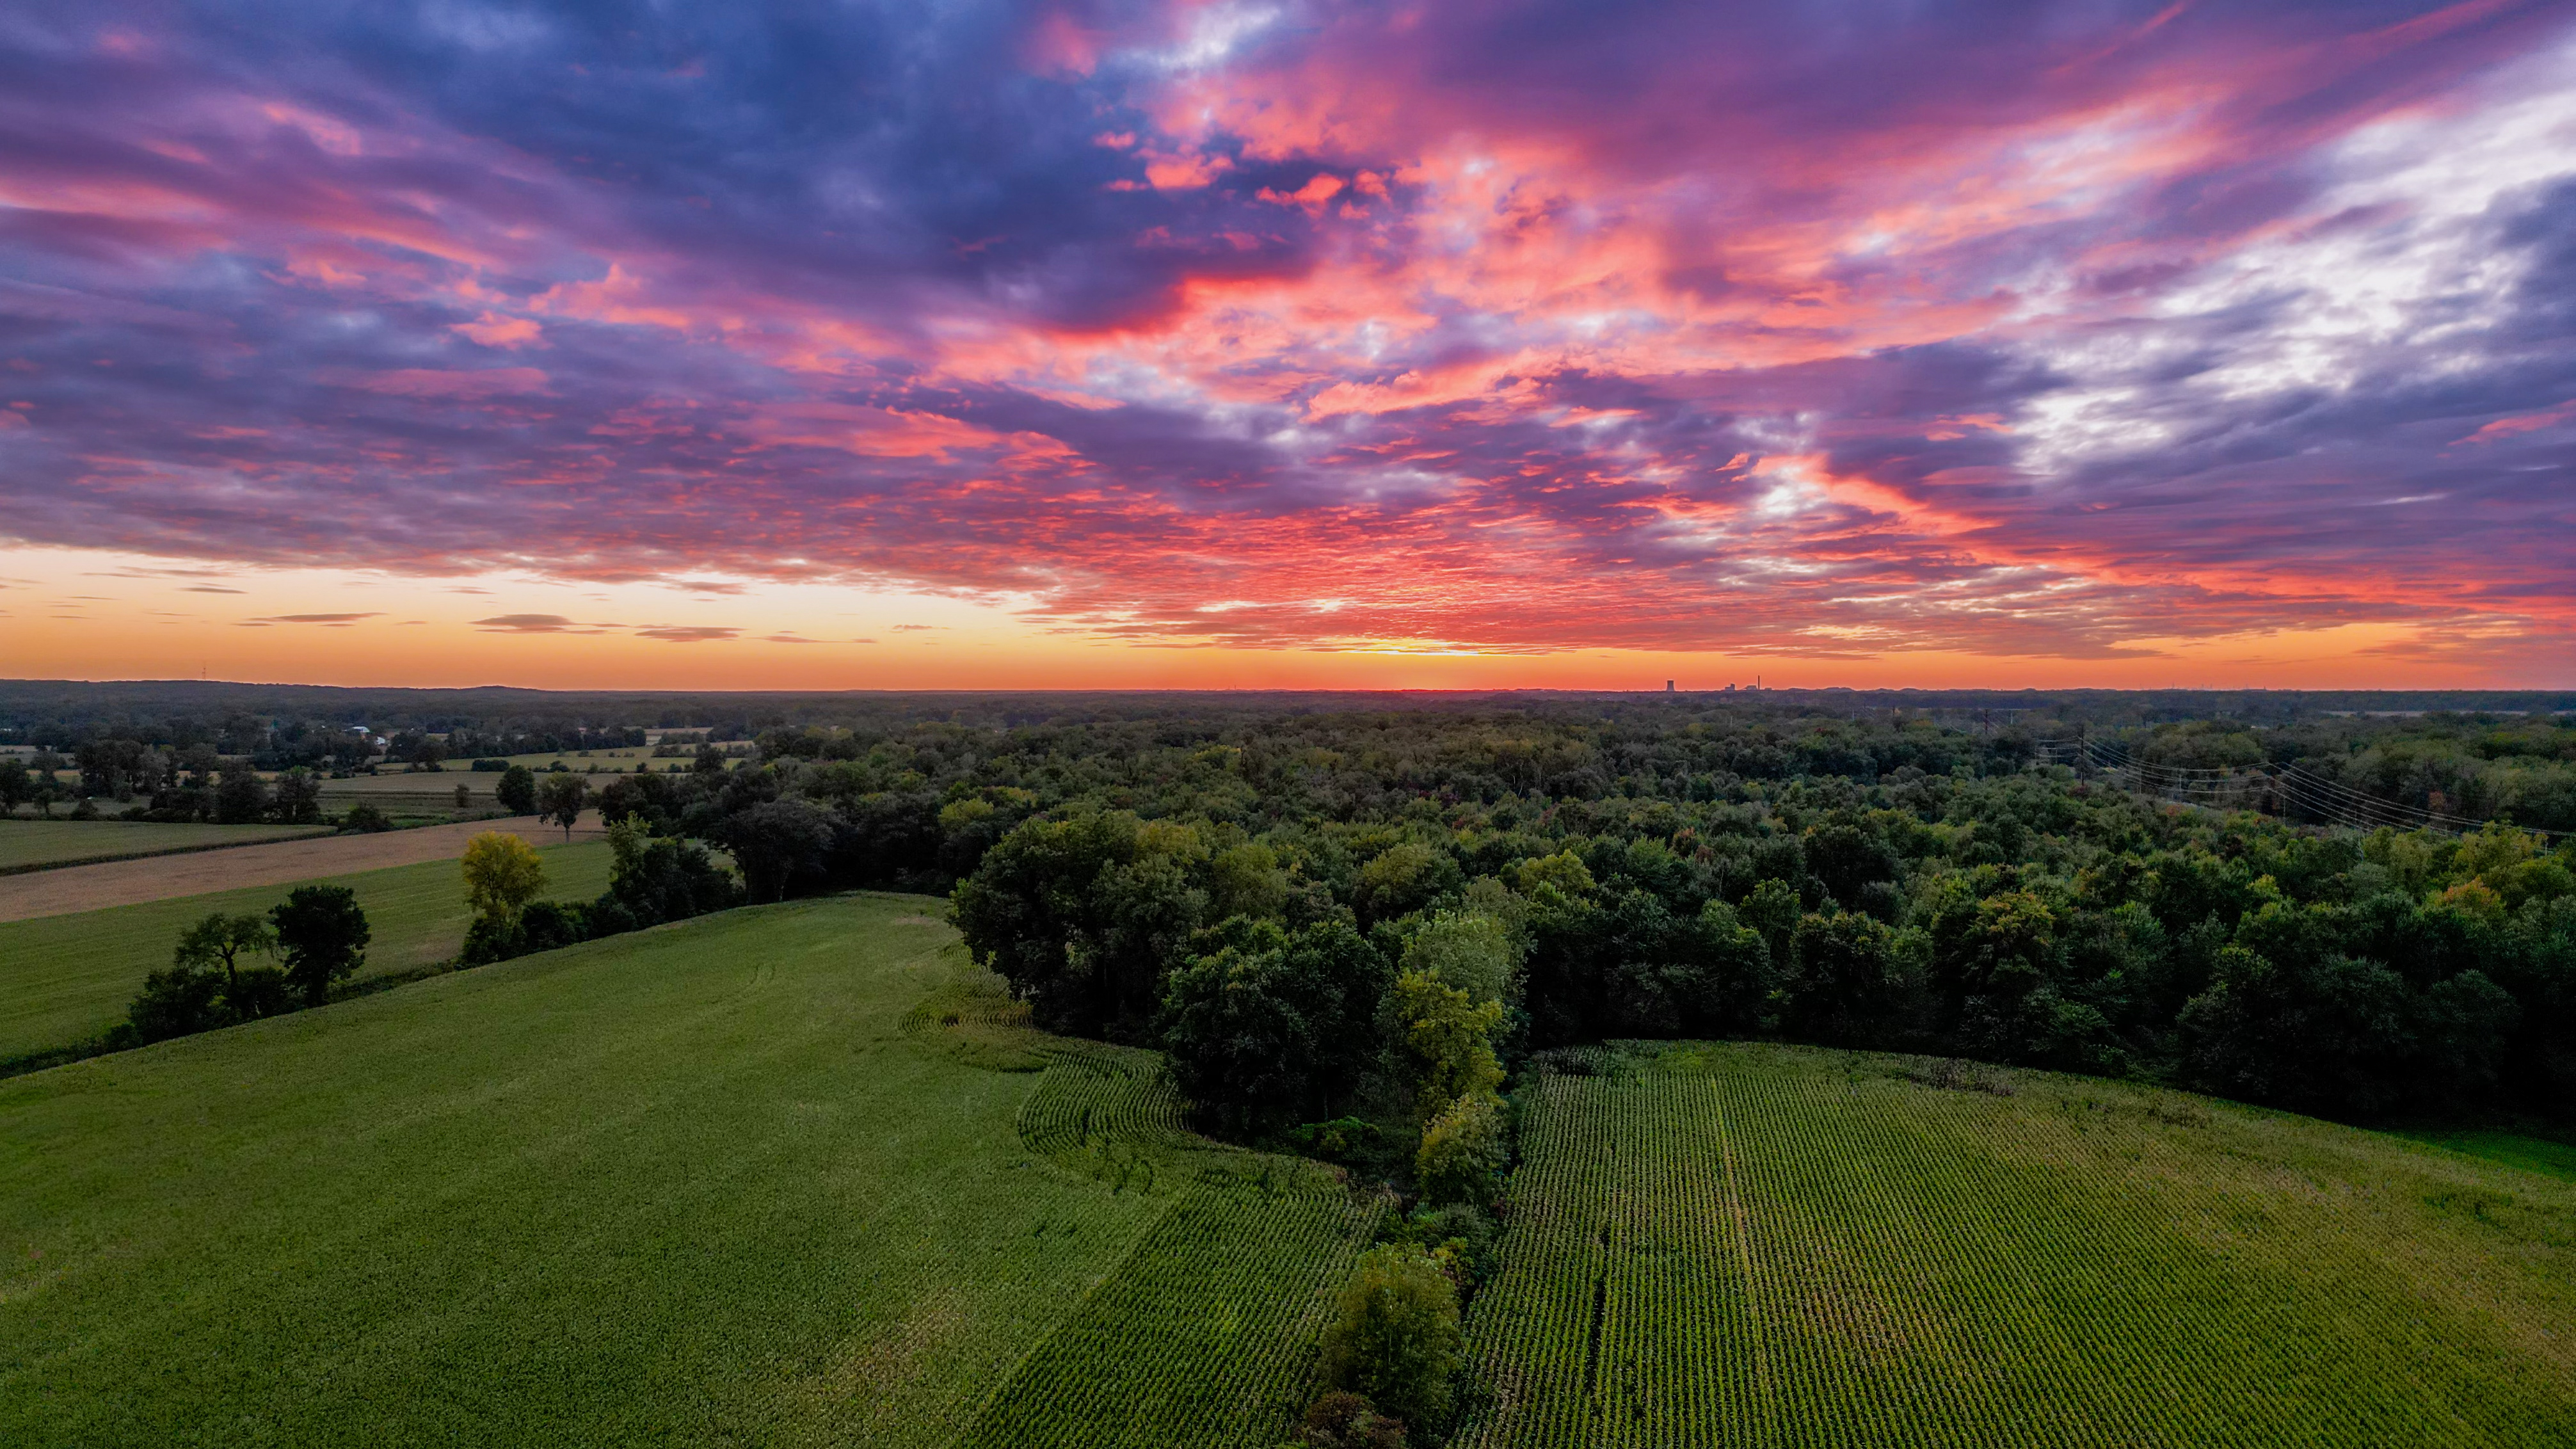 General 4025x2264 corn landscape drone trees clouds farm sunset sky drone photo sunlight sunset glow grass green